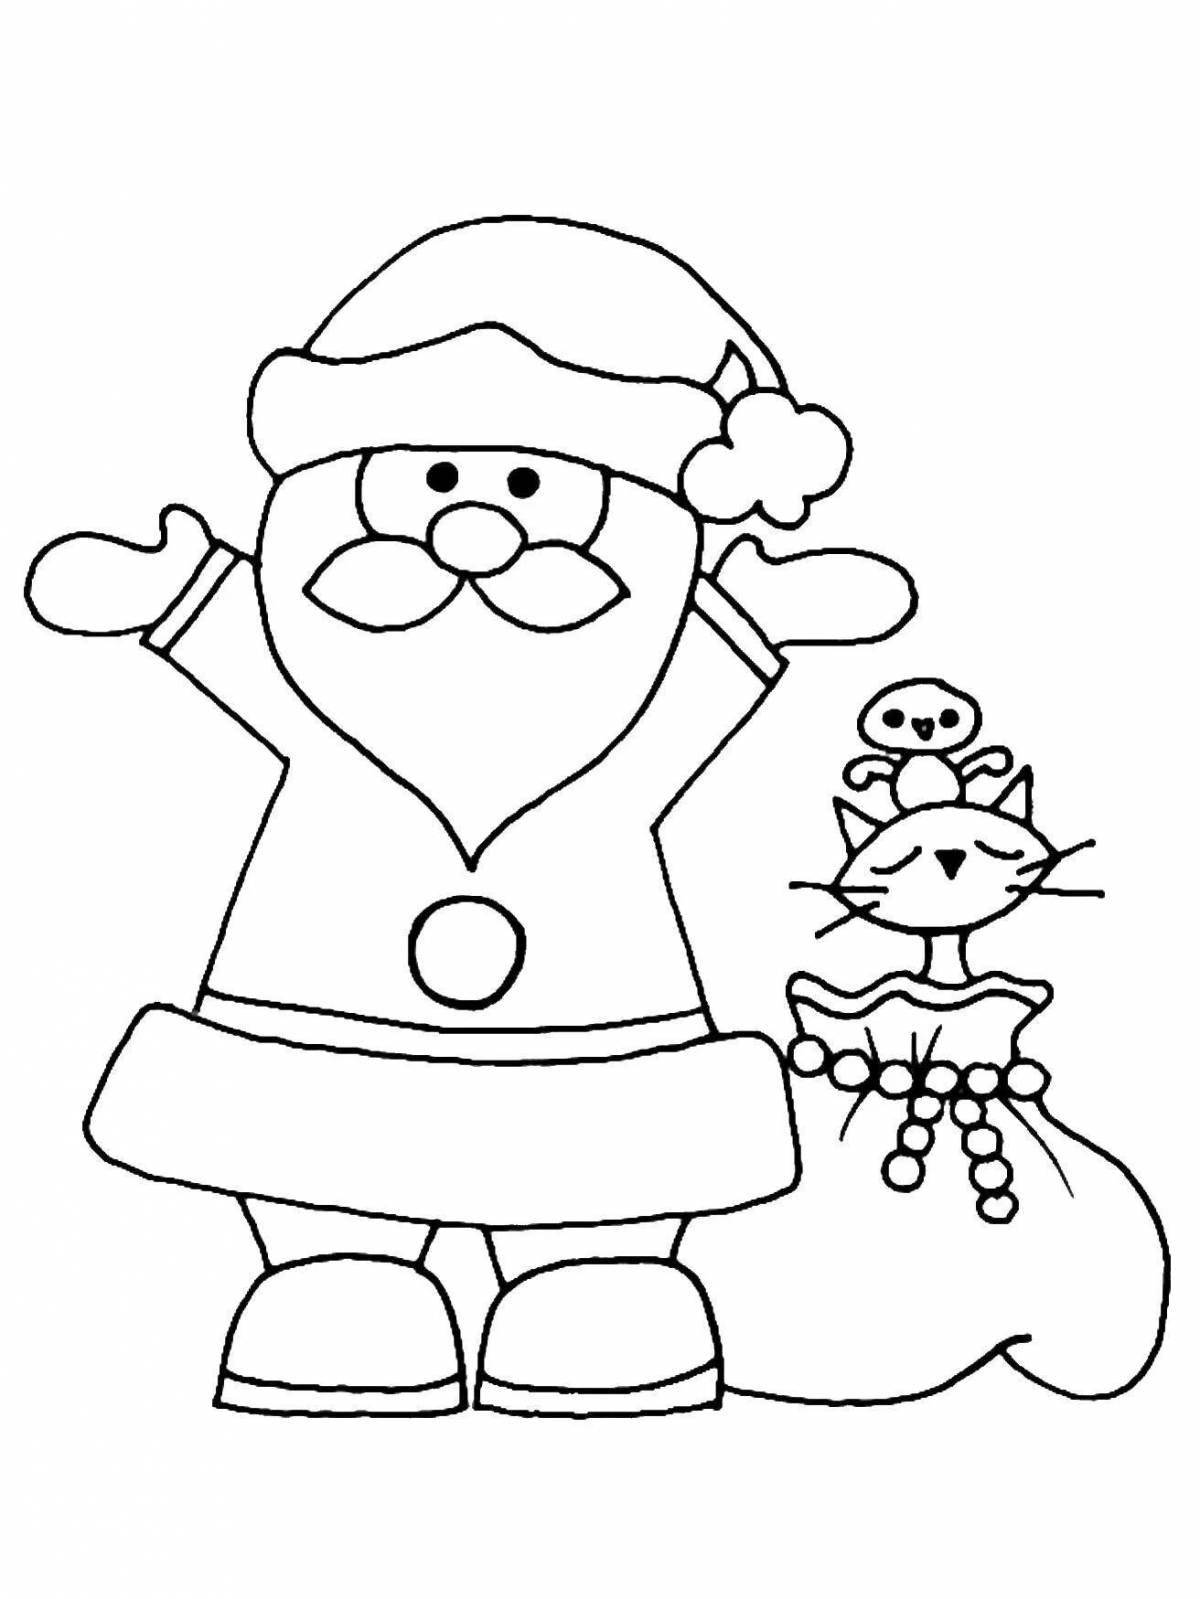 Santa's holiday coloring book for kids